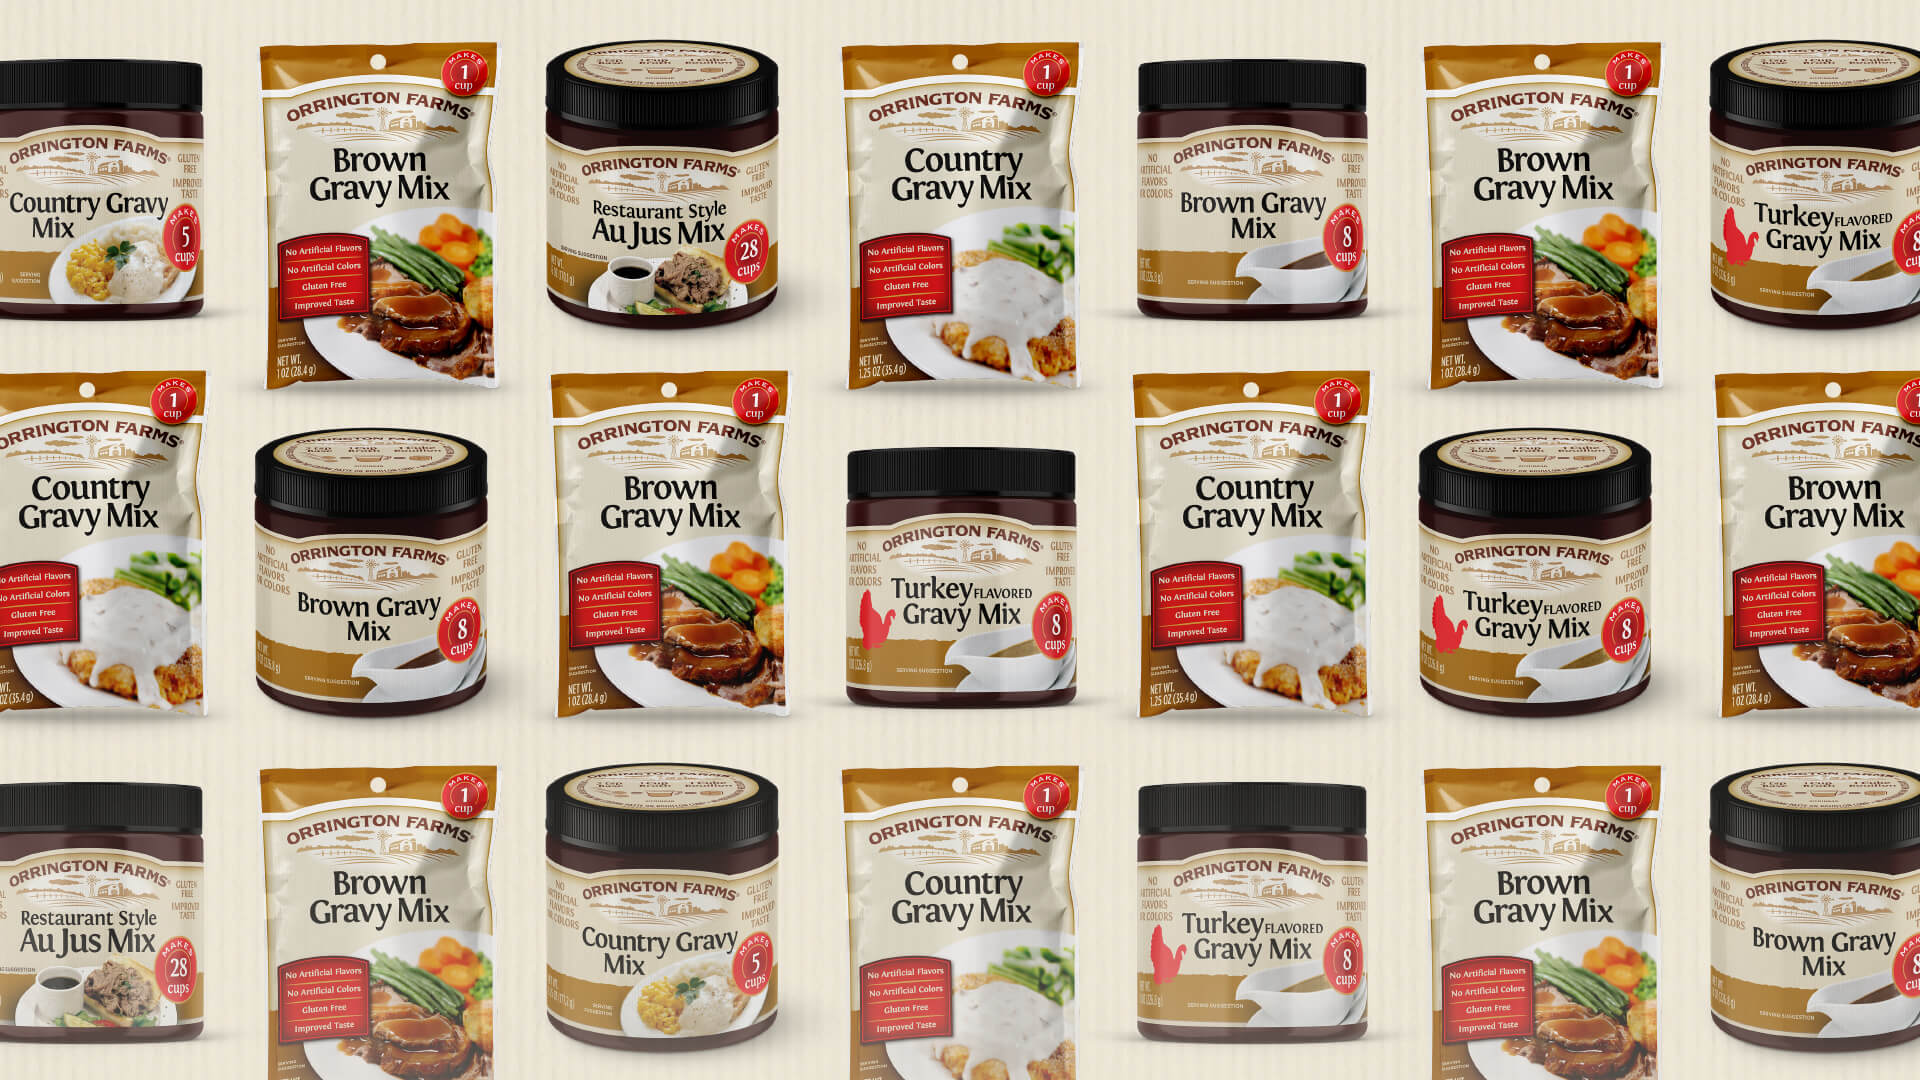 Orrington Farms Gravy Mixes Product Wall